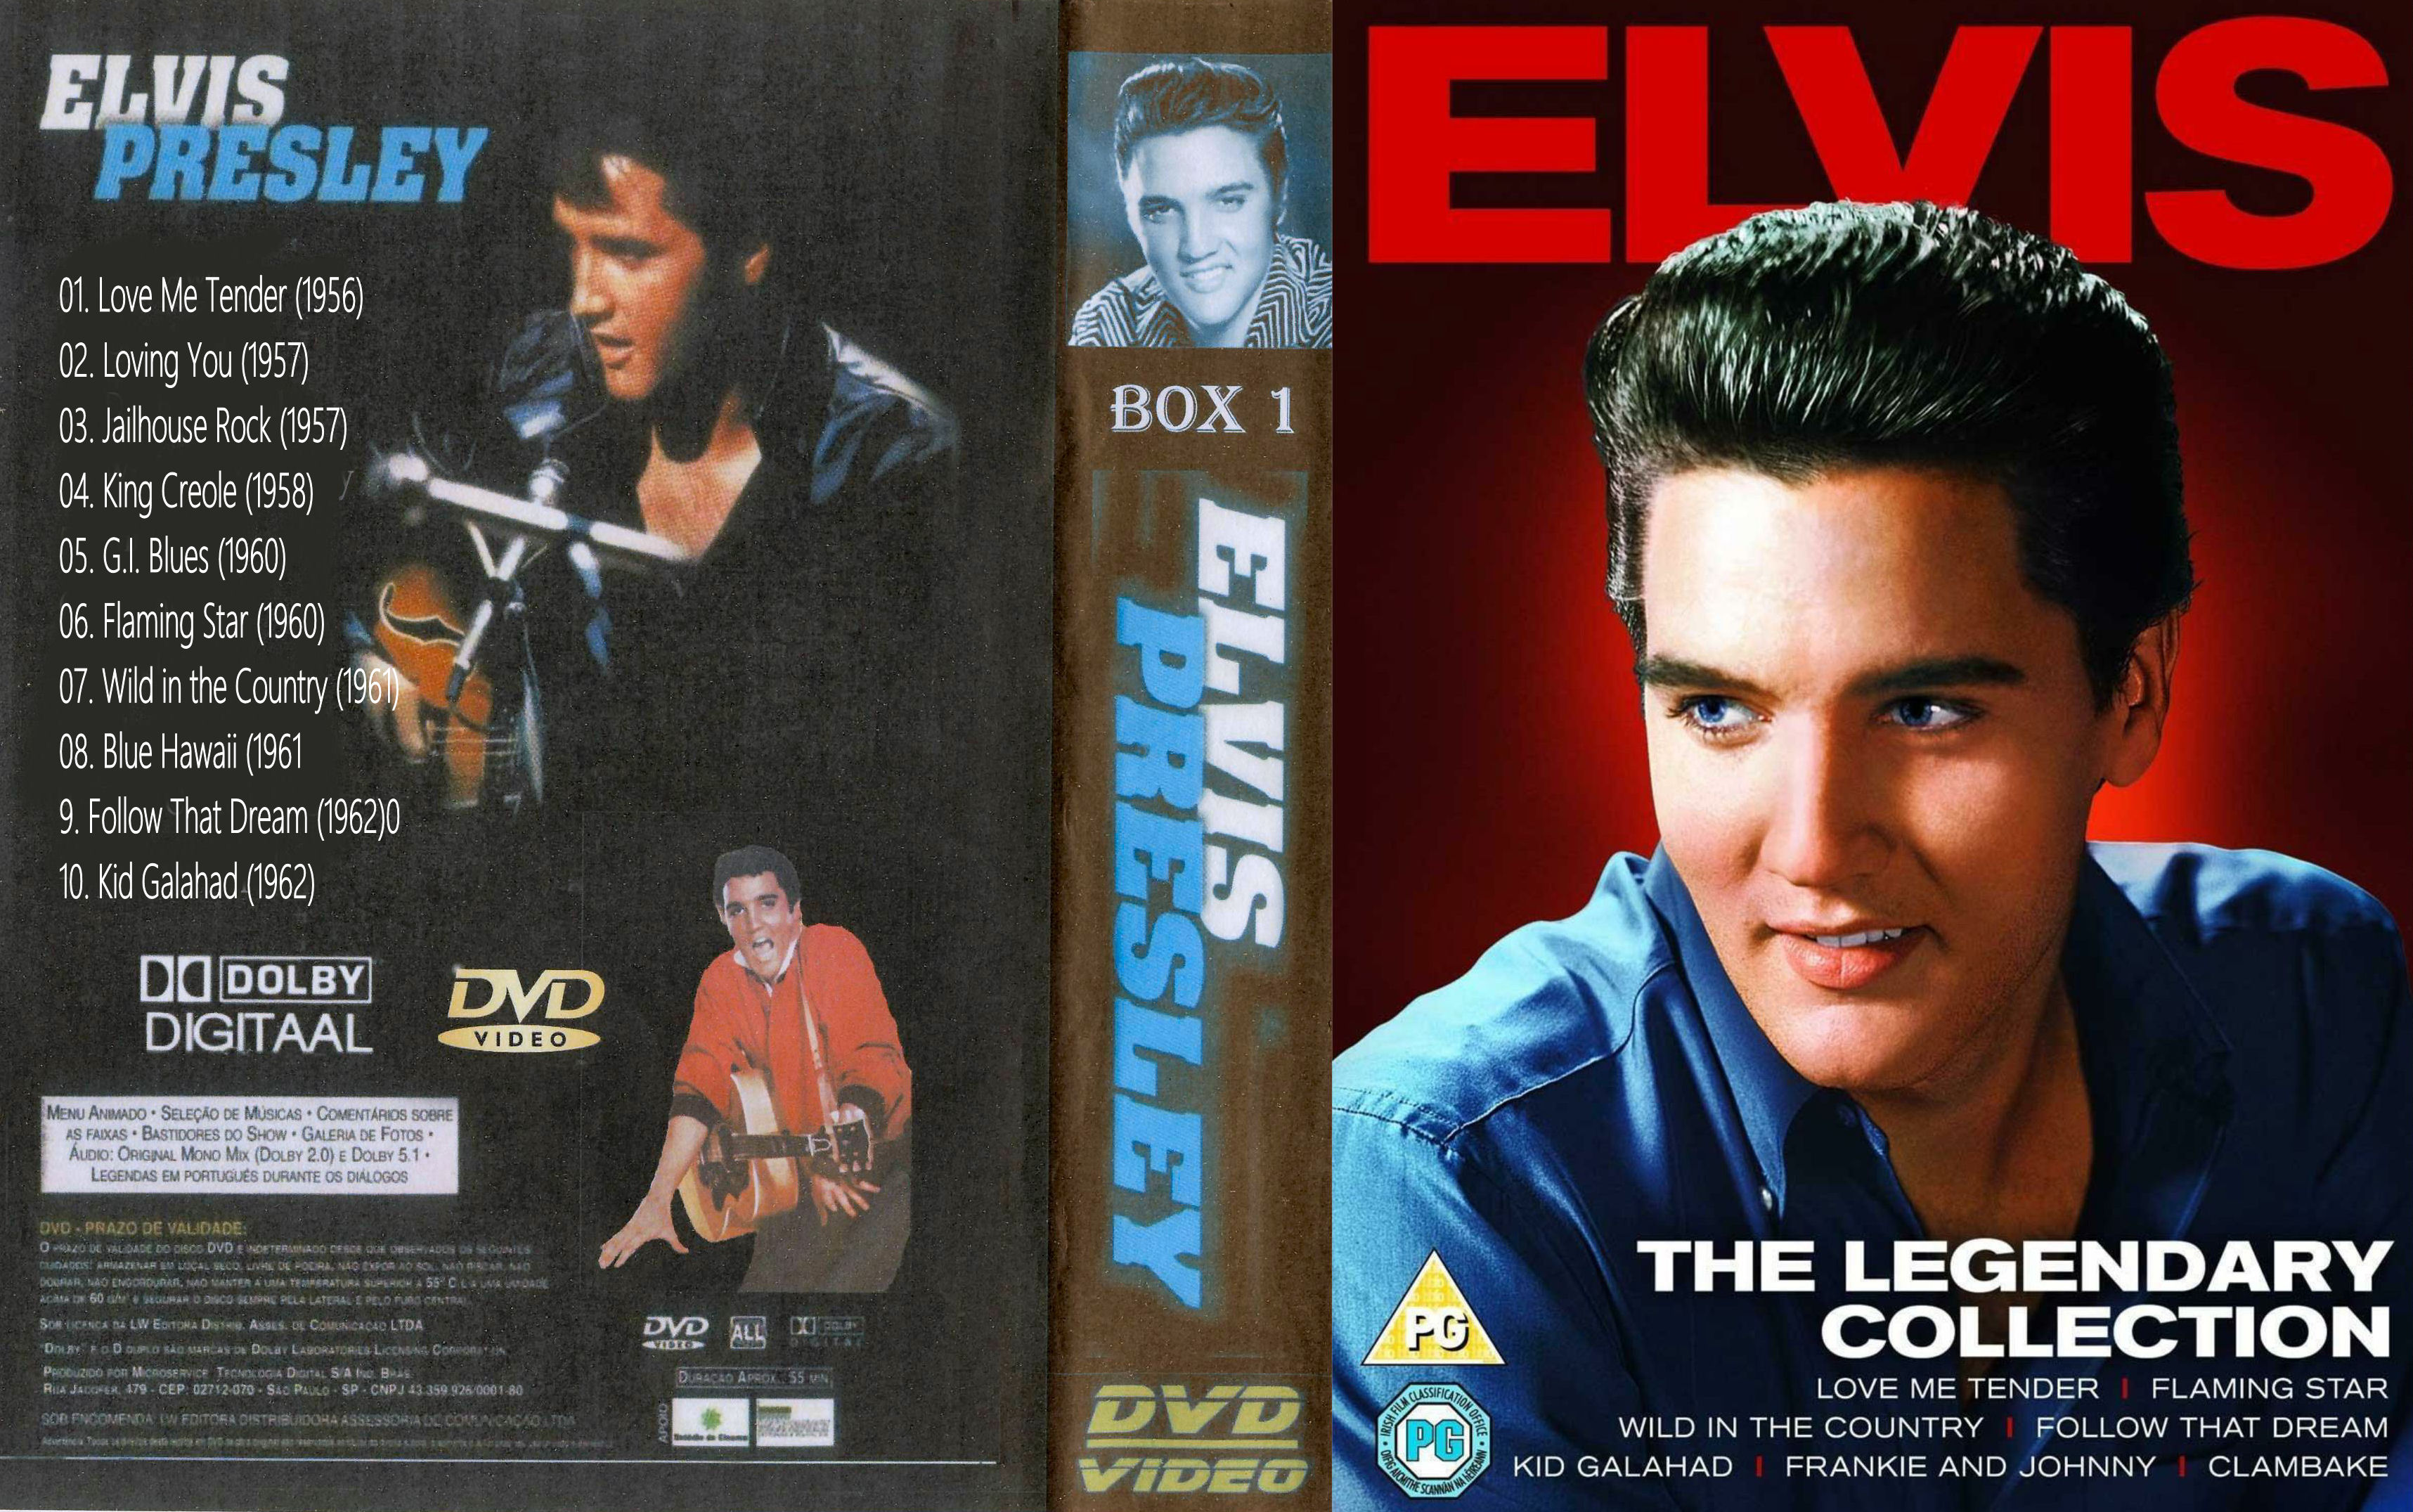 Elvie Presley Collectie ( 01 - Love Me Tender ) DvD 1 van 31